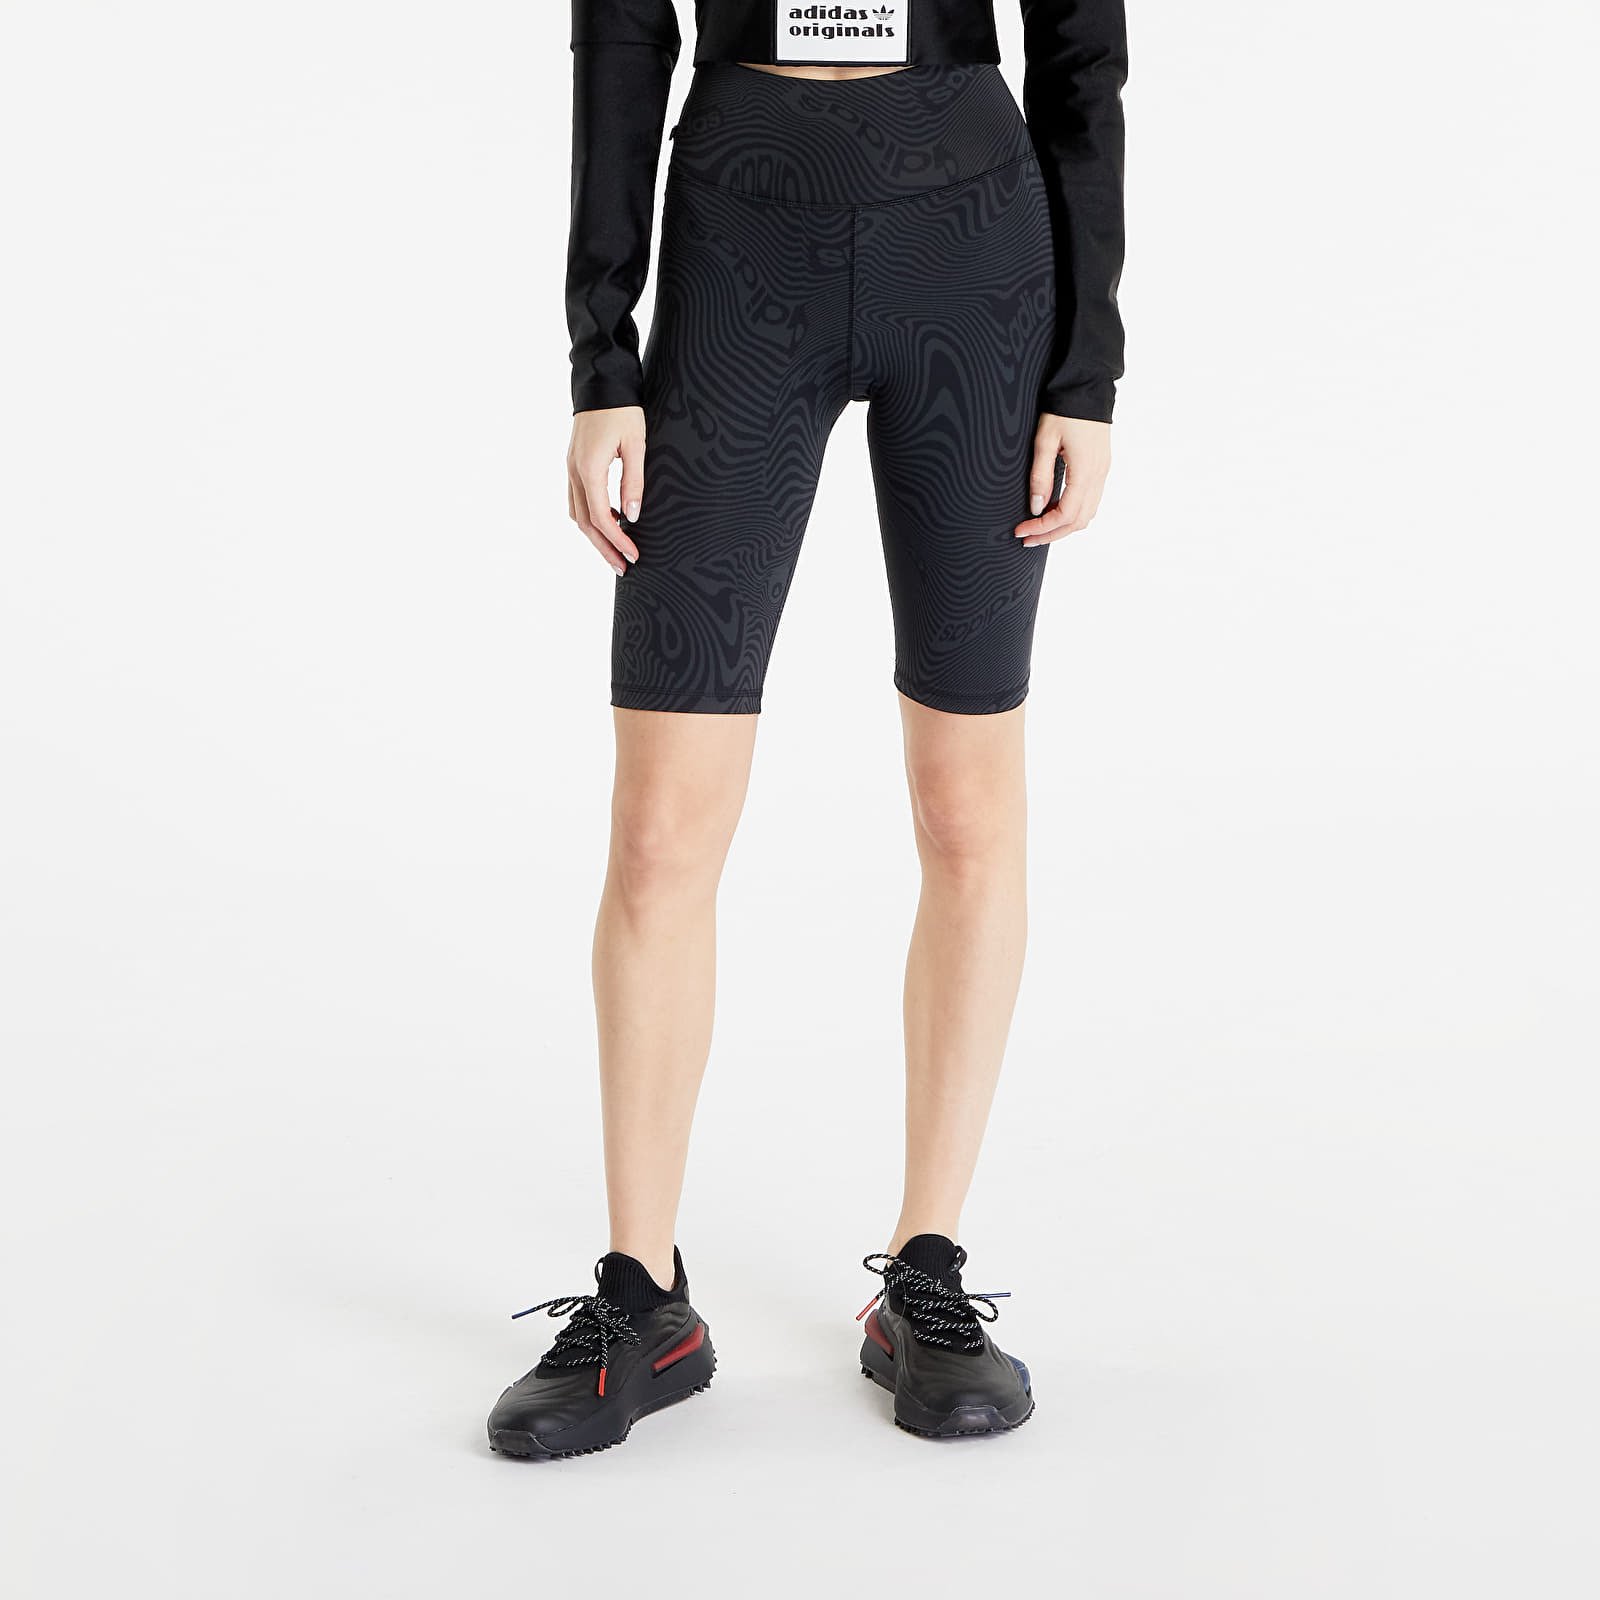 adidas Originals - marble print bike shorts carbon/ black